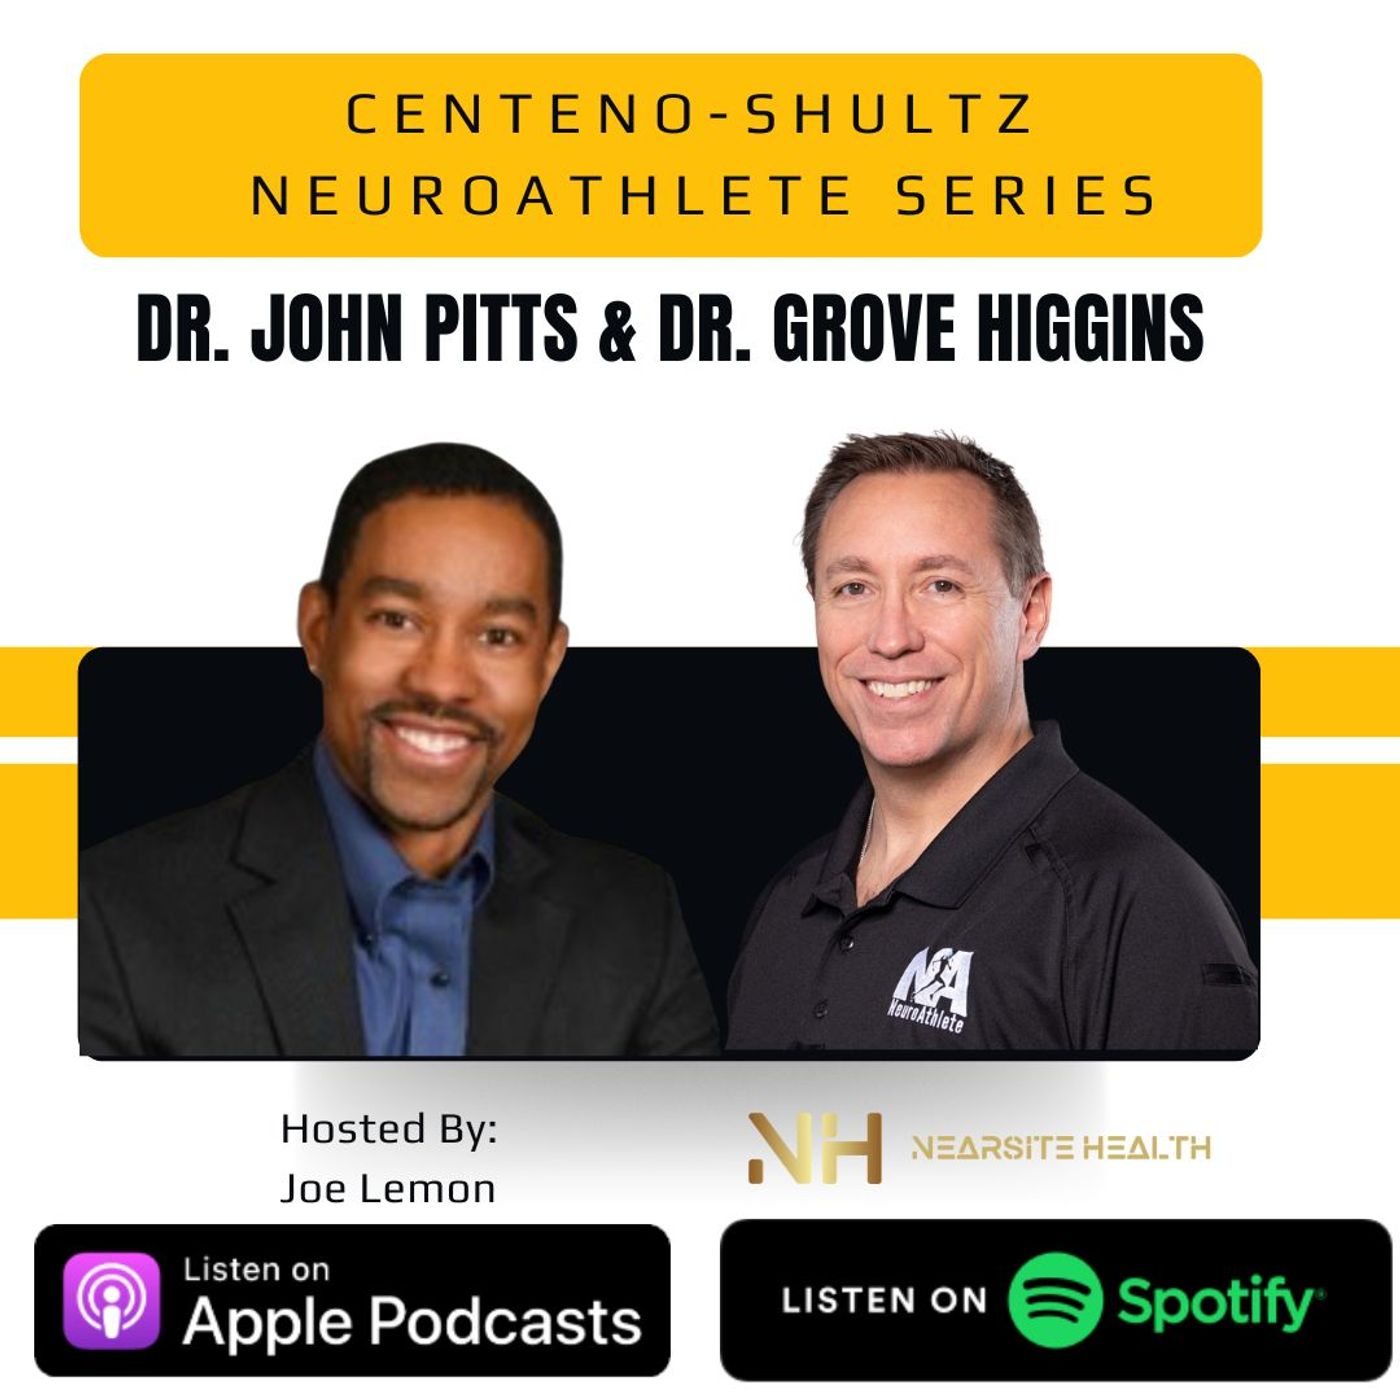 Redefine Healthcare - Dr. Pitts and Dr. Higgins